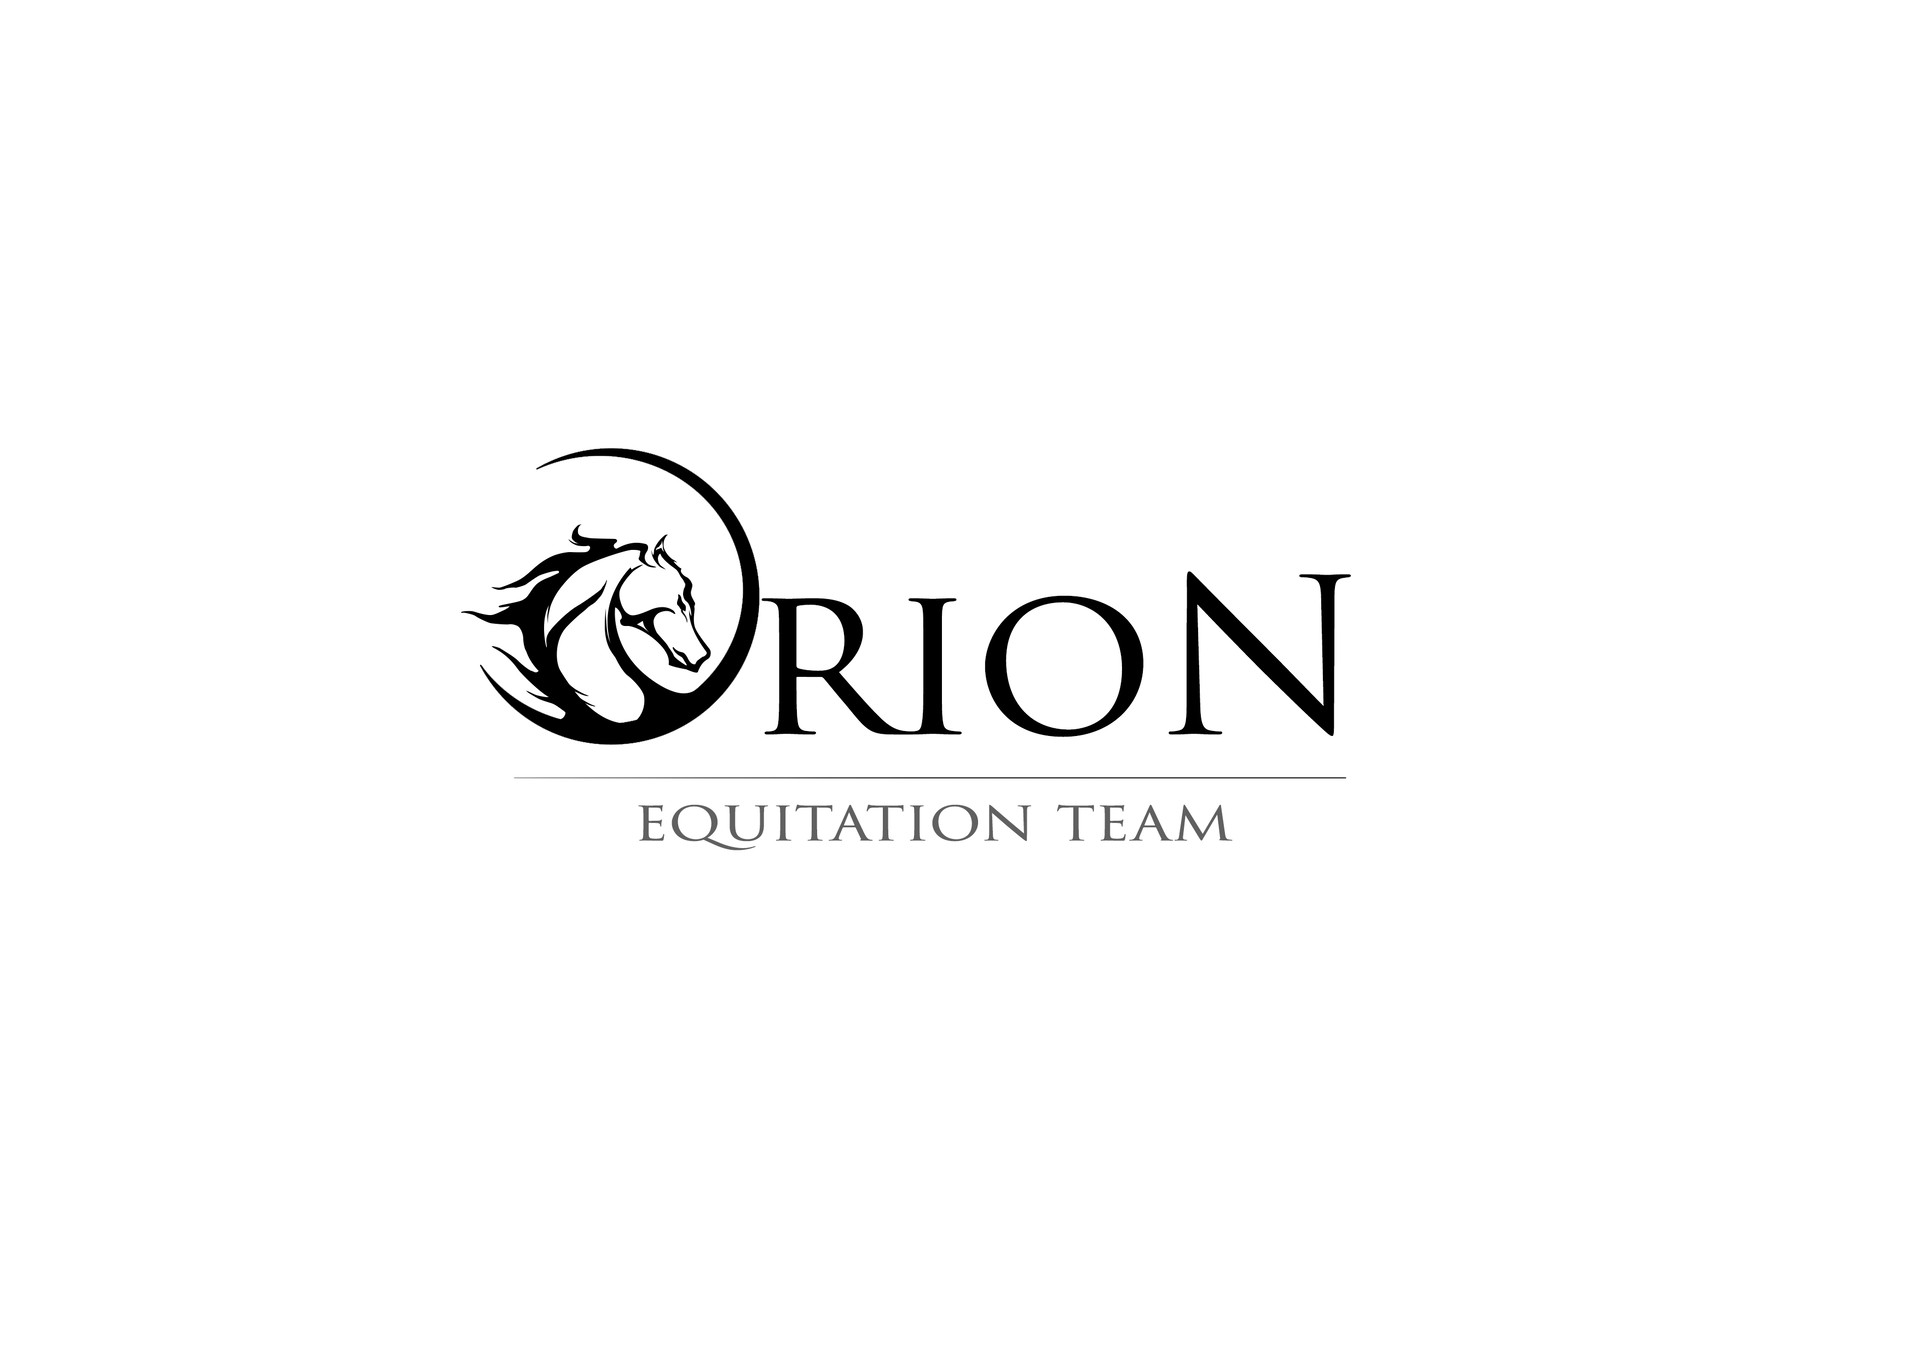 Business Logo Modern Orion Arrow Vector Stock Vector (Royalty Free)  1330588118 | Shutterstock